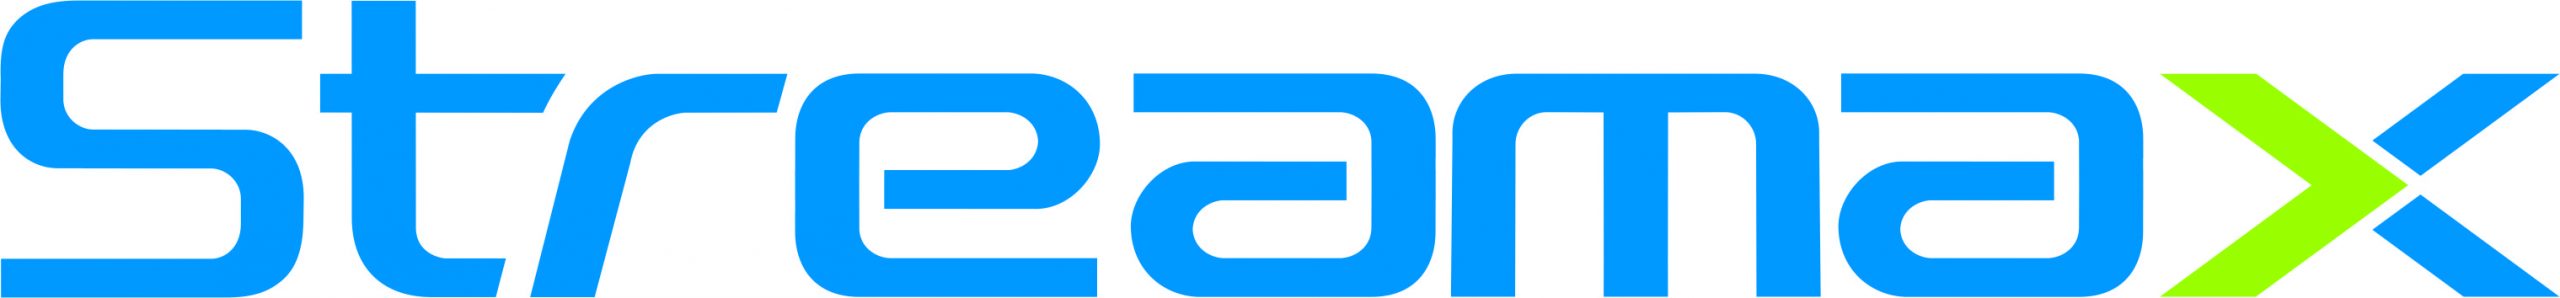 streamax-logo-scaled-1